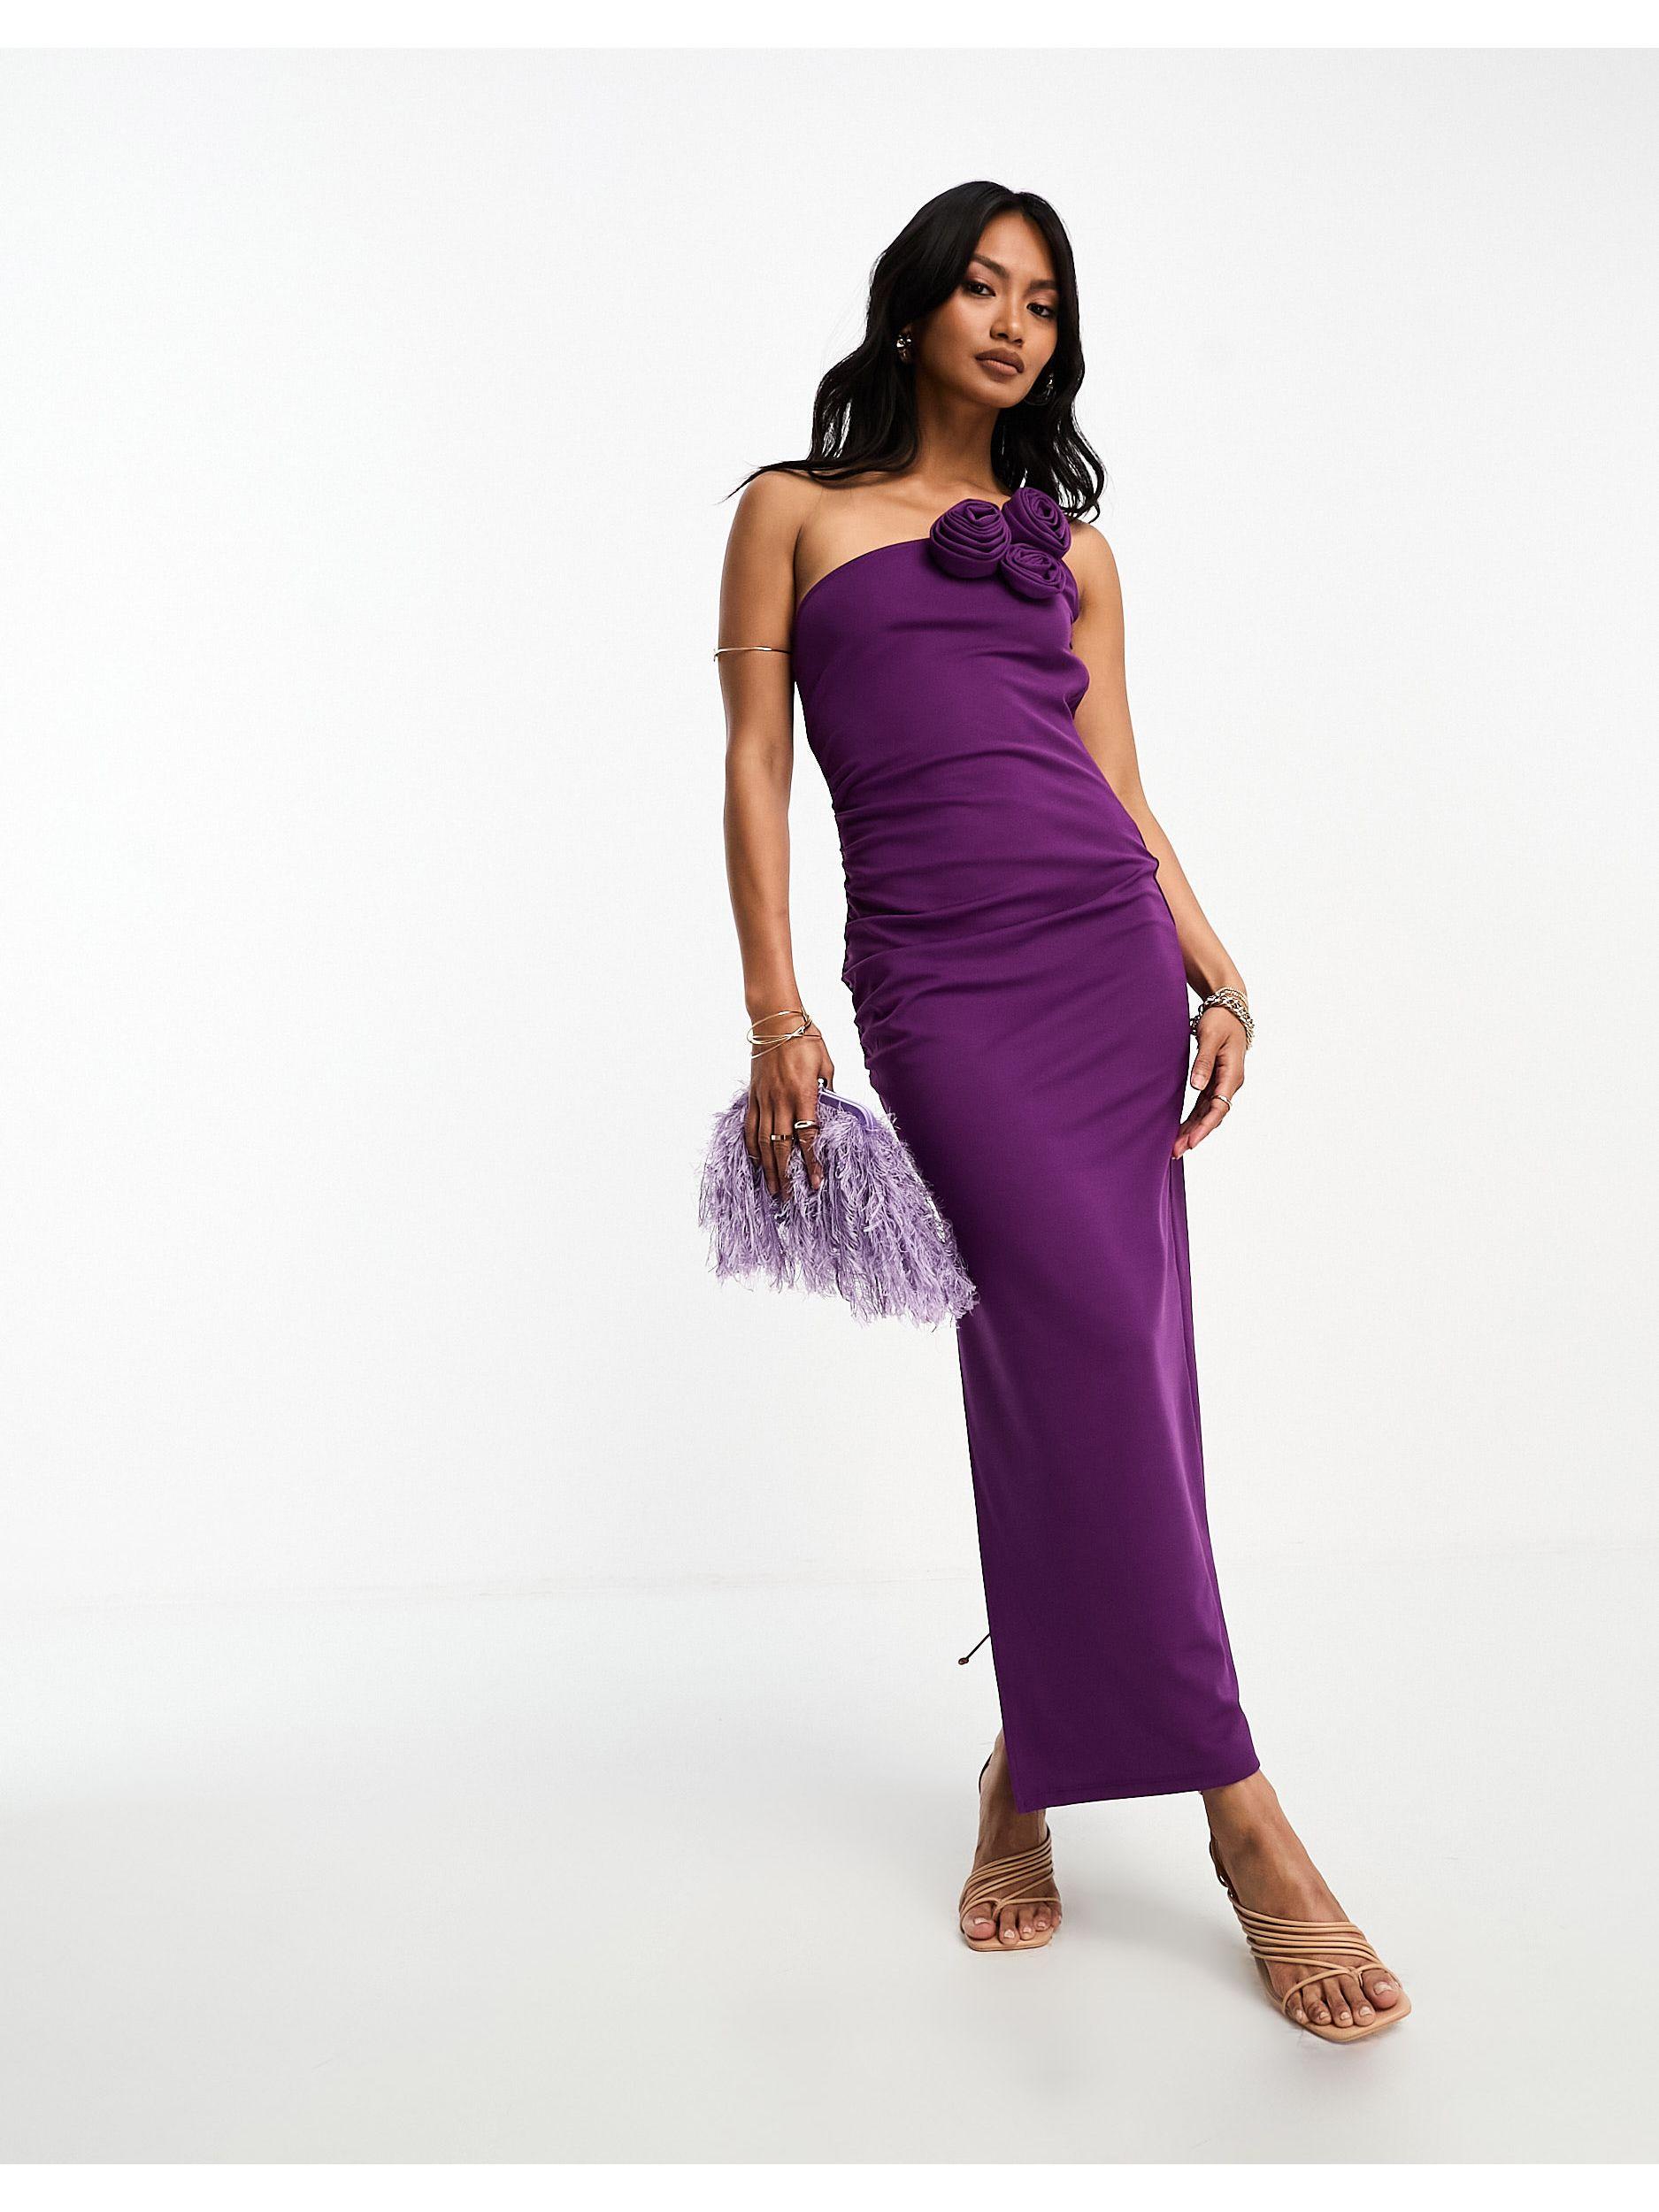 mango purple dress